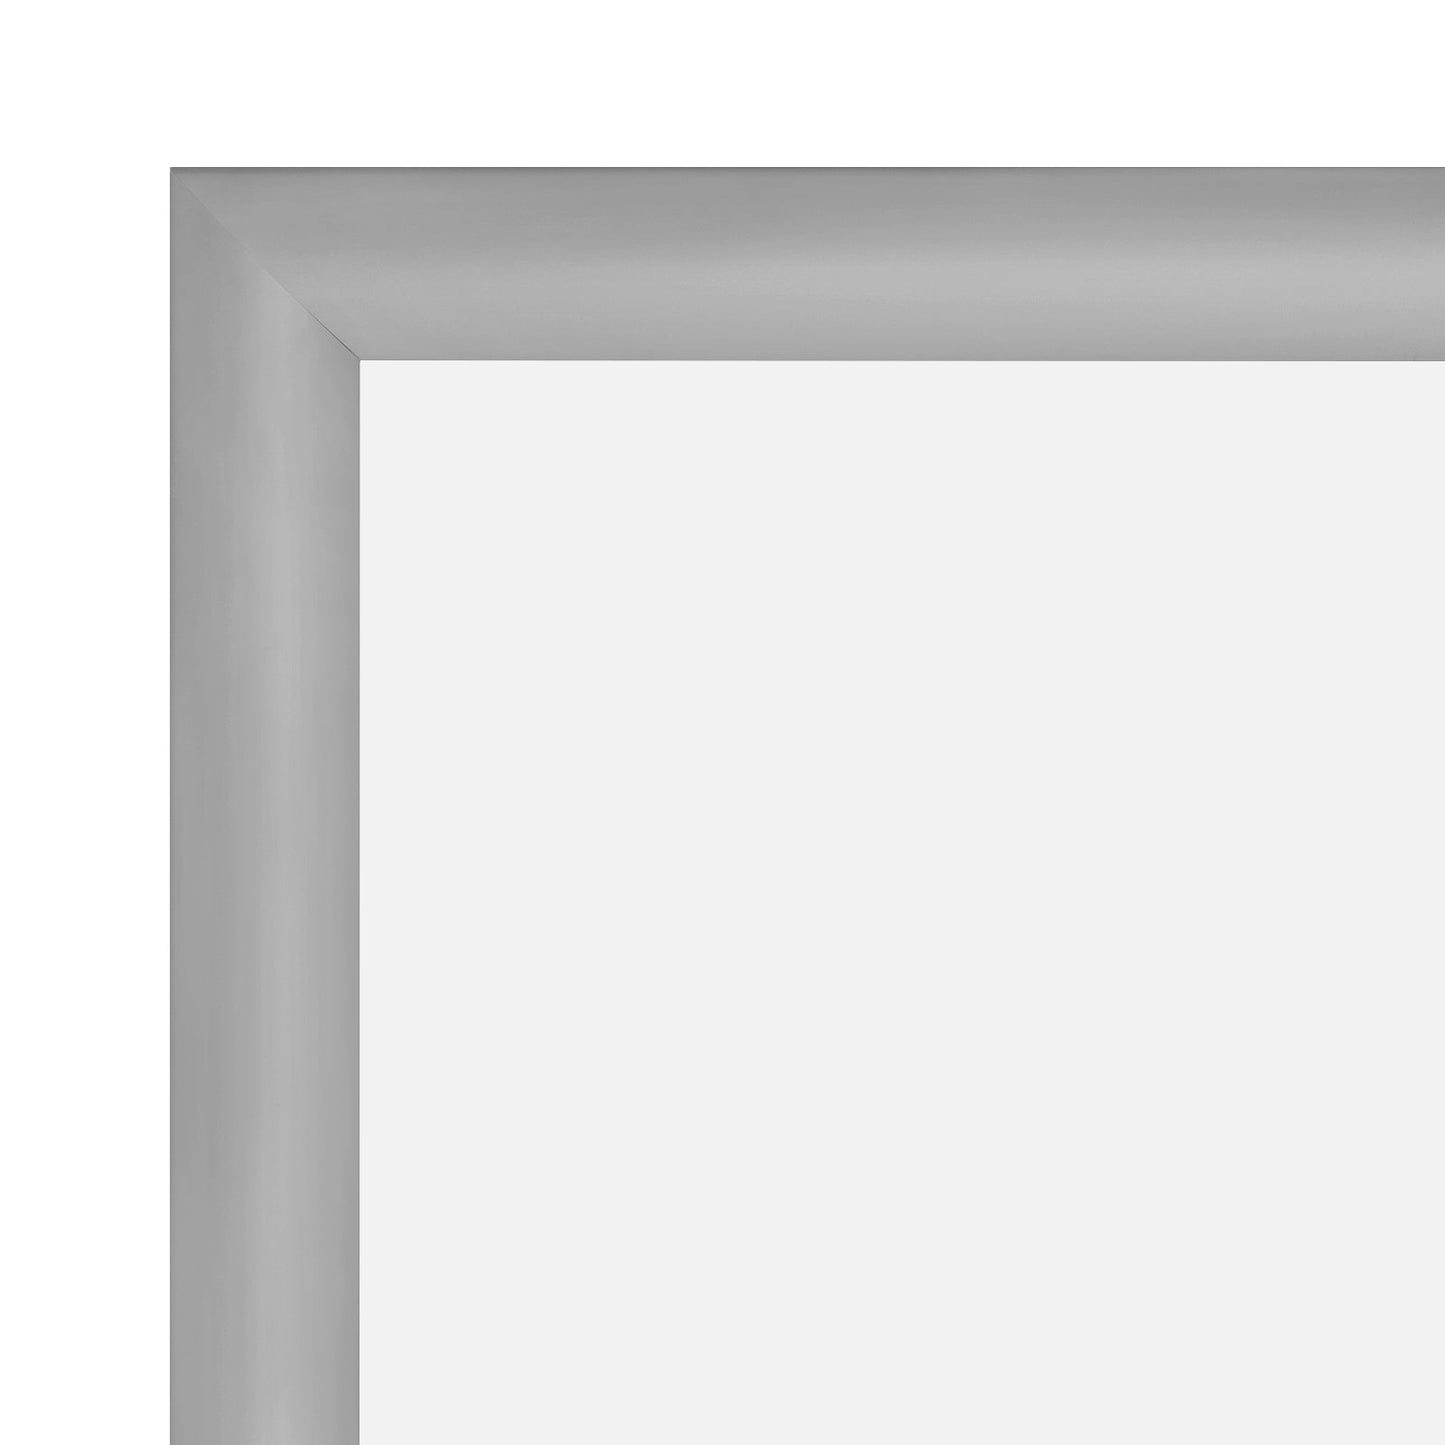 20x36 Silver SnapeZo® Snap Frame - 1.2" Profile - Snap Frames Direct